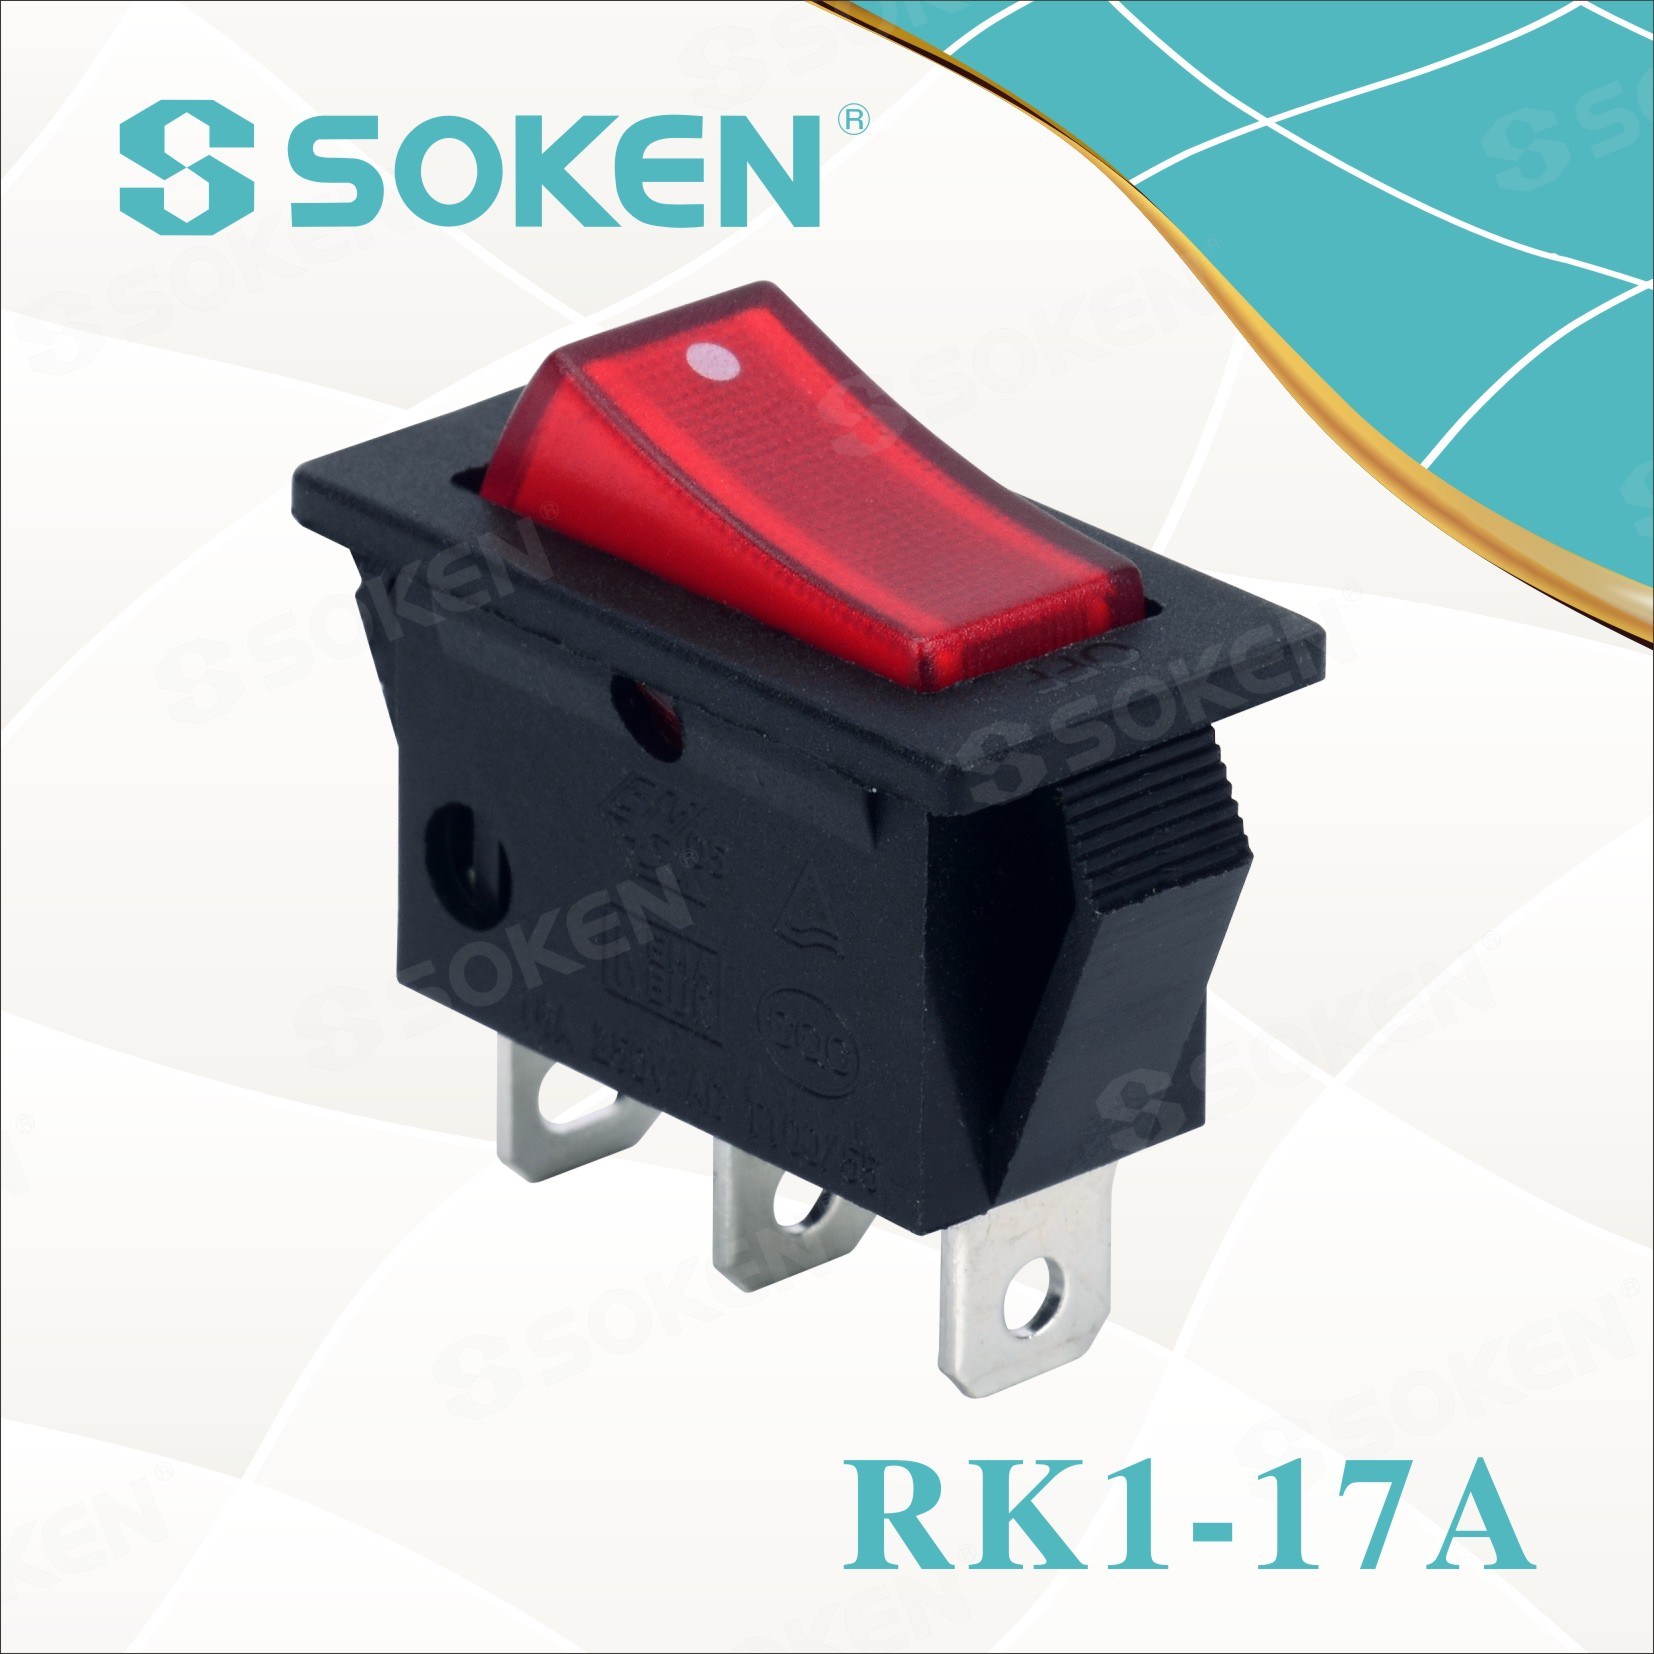 Soken Rk1-17A 1X1n Red on off Illuminated Rocker Switch